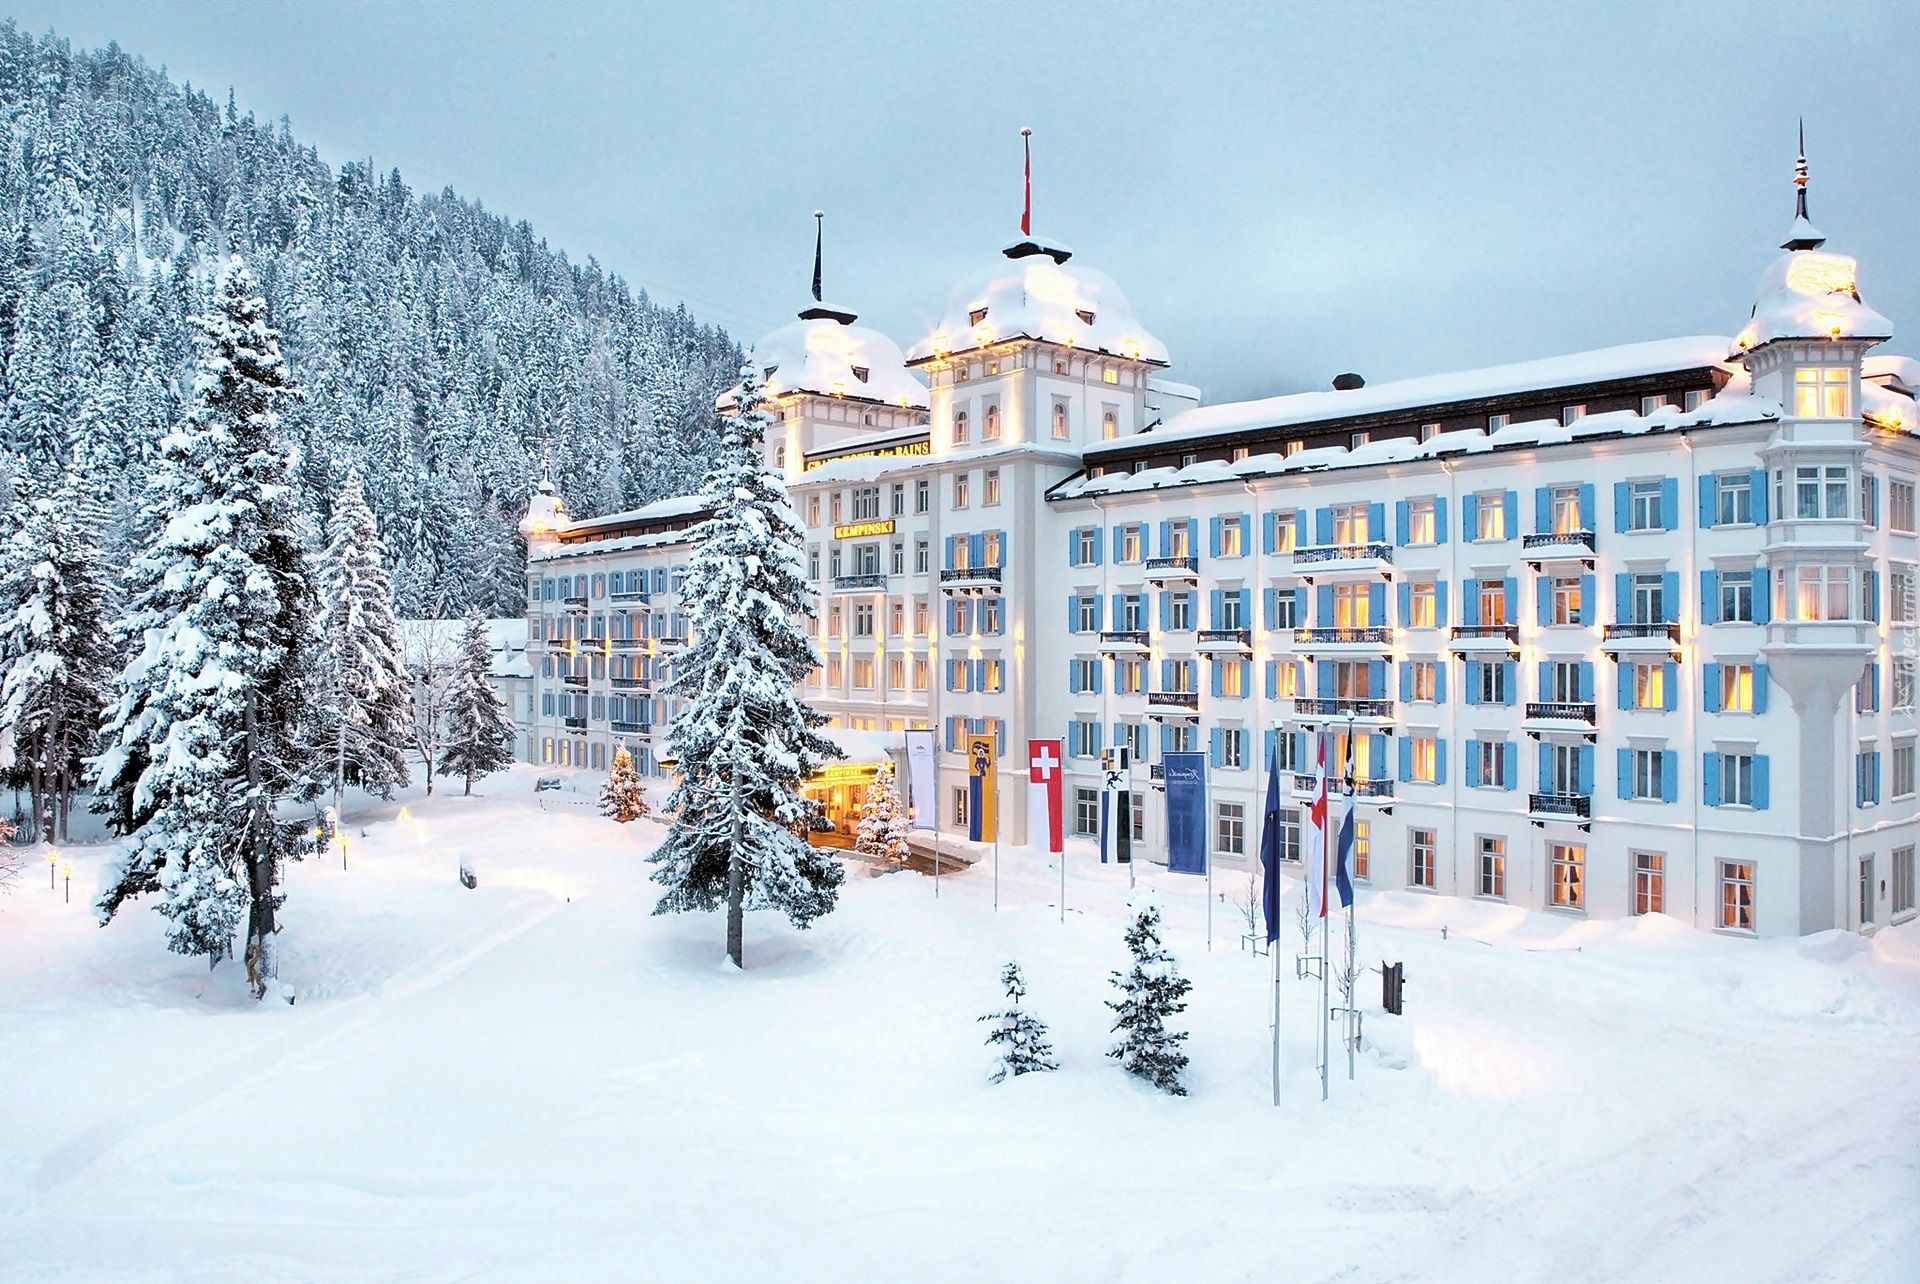 Góry, Las, Hotel, Kempinski, Grand des Bains, St.Moritz